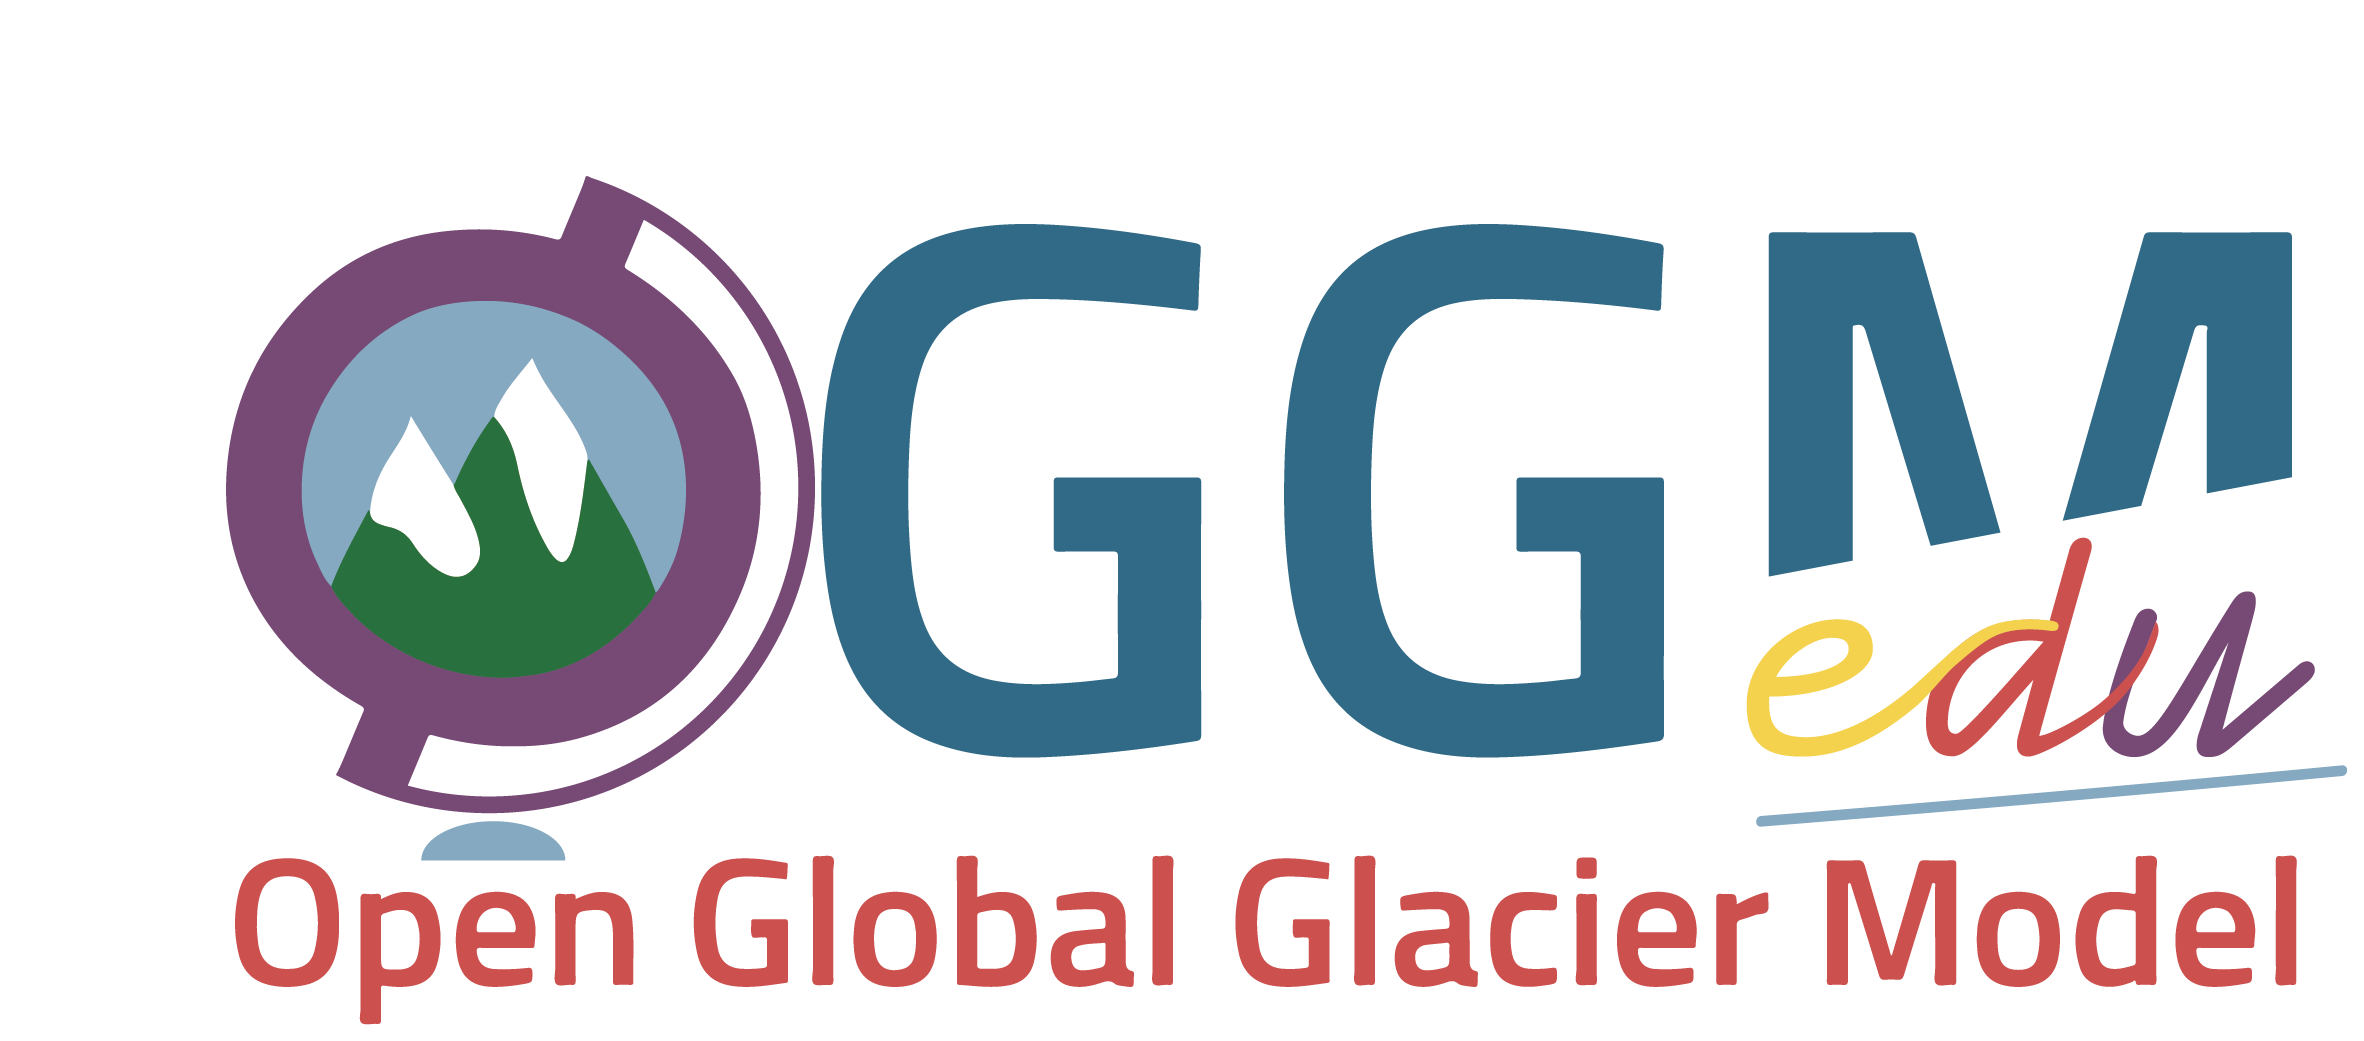 _images/oggm_edu_globe_l.png